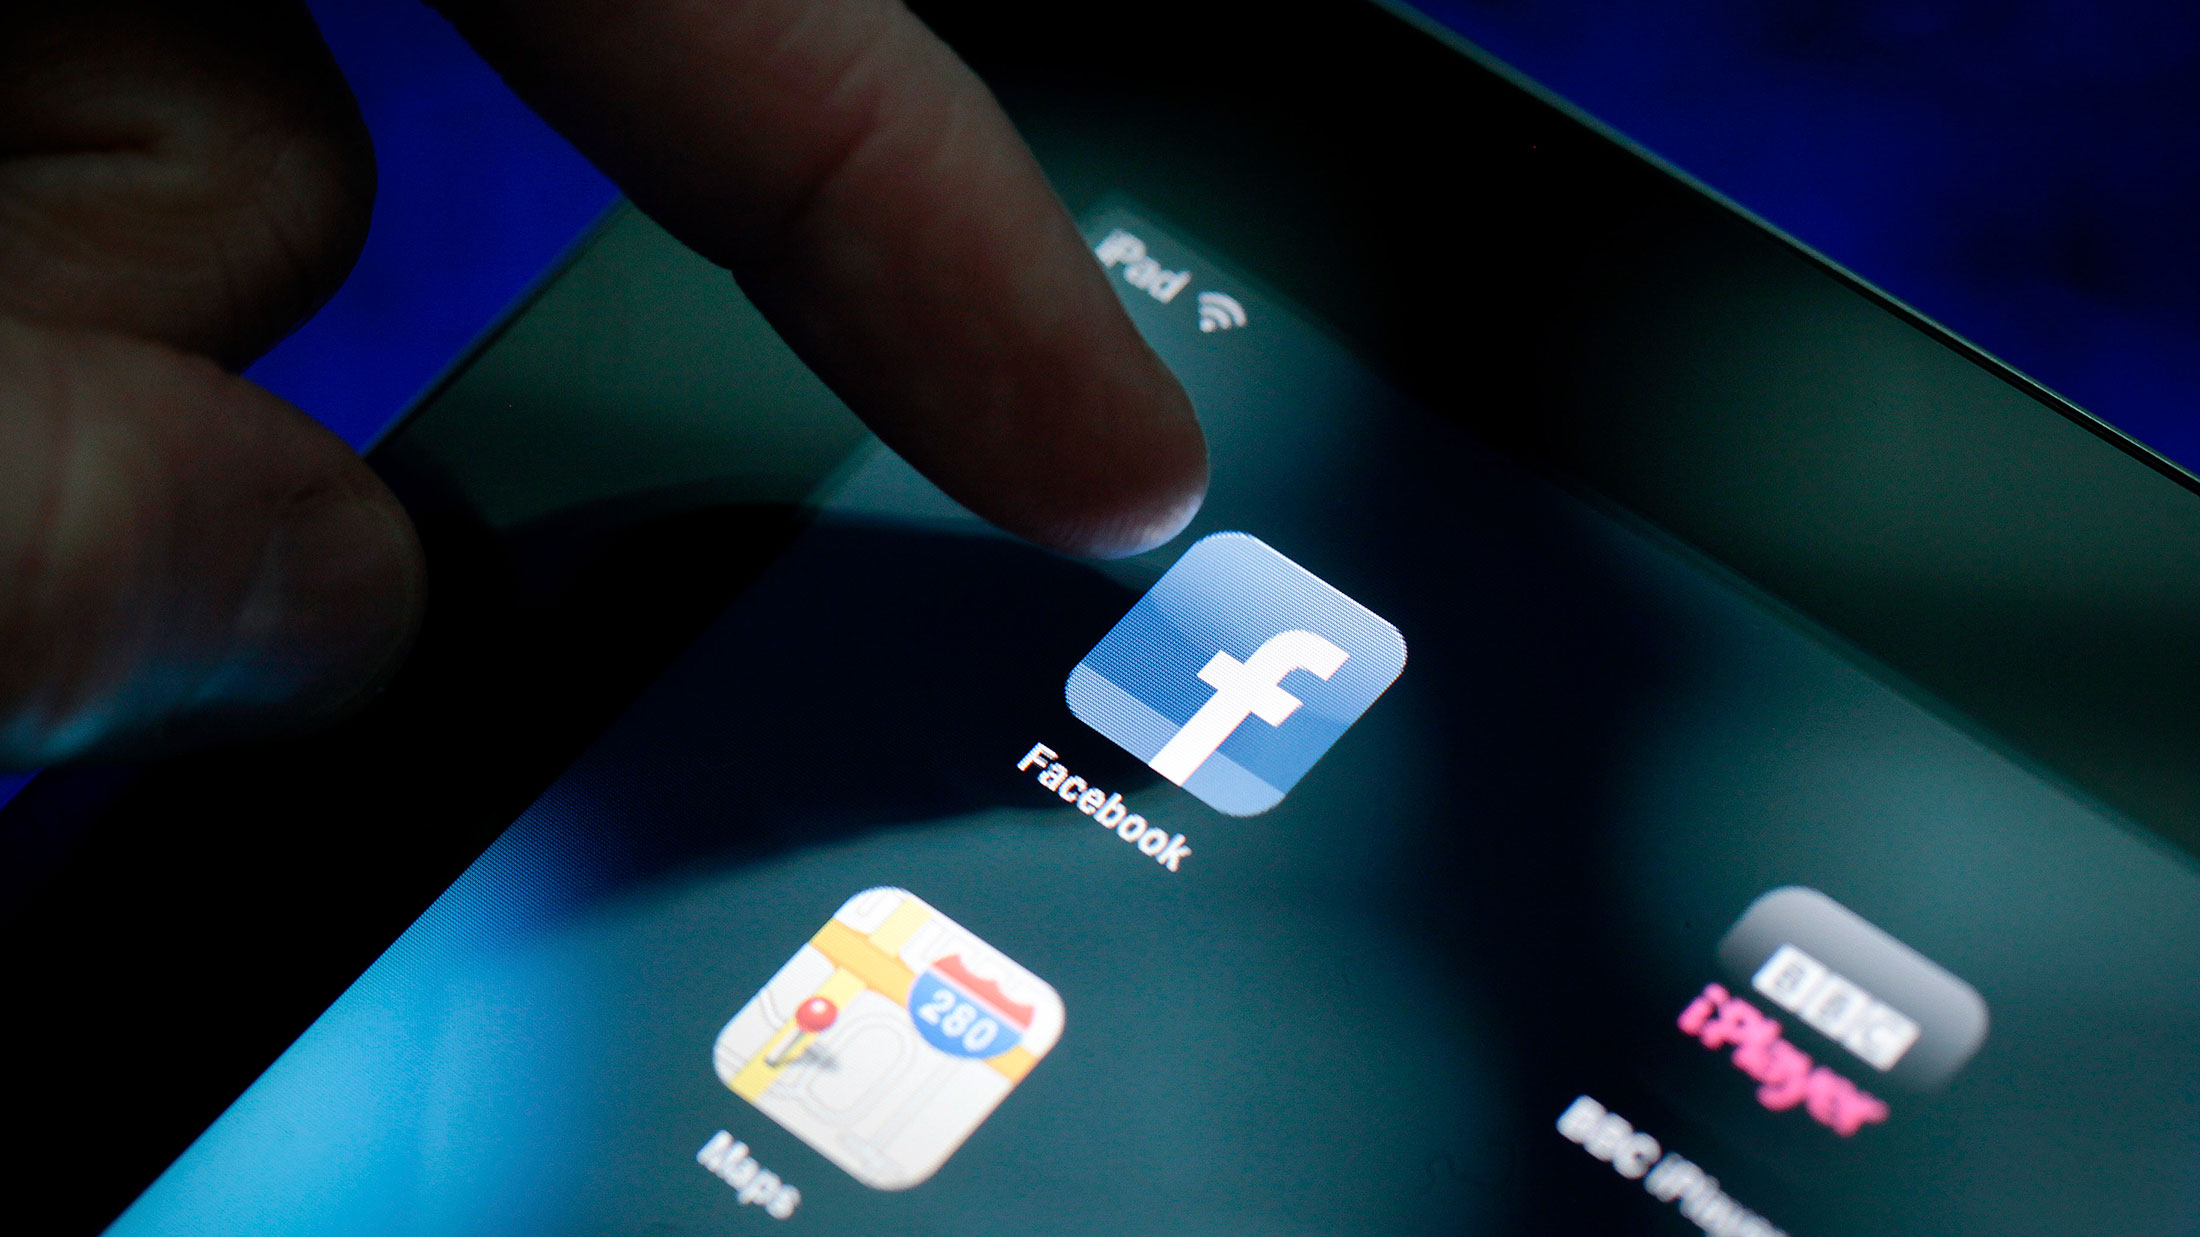 Facebook Introduces App That Sends Smartphone Alerts